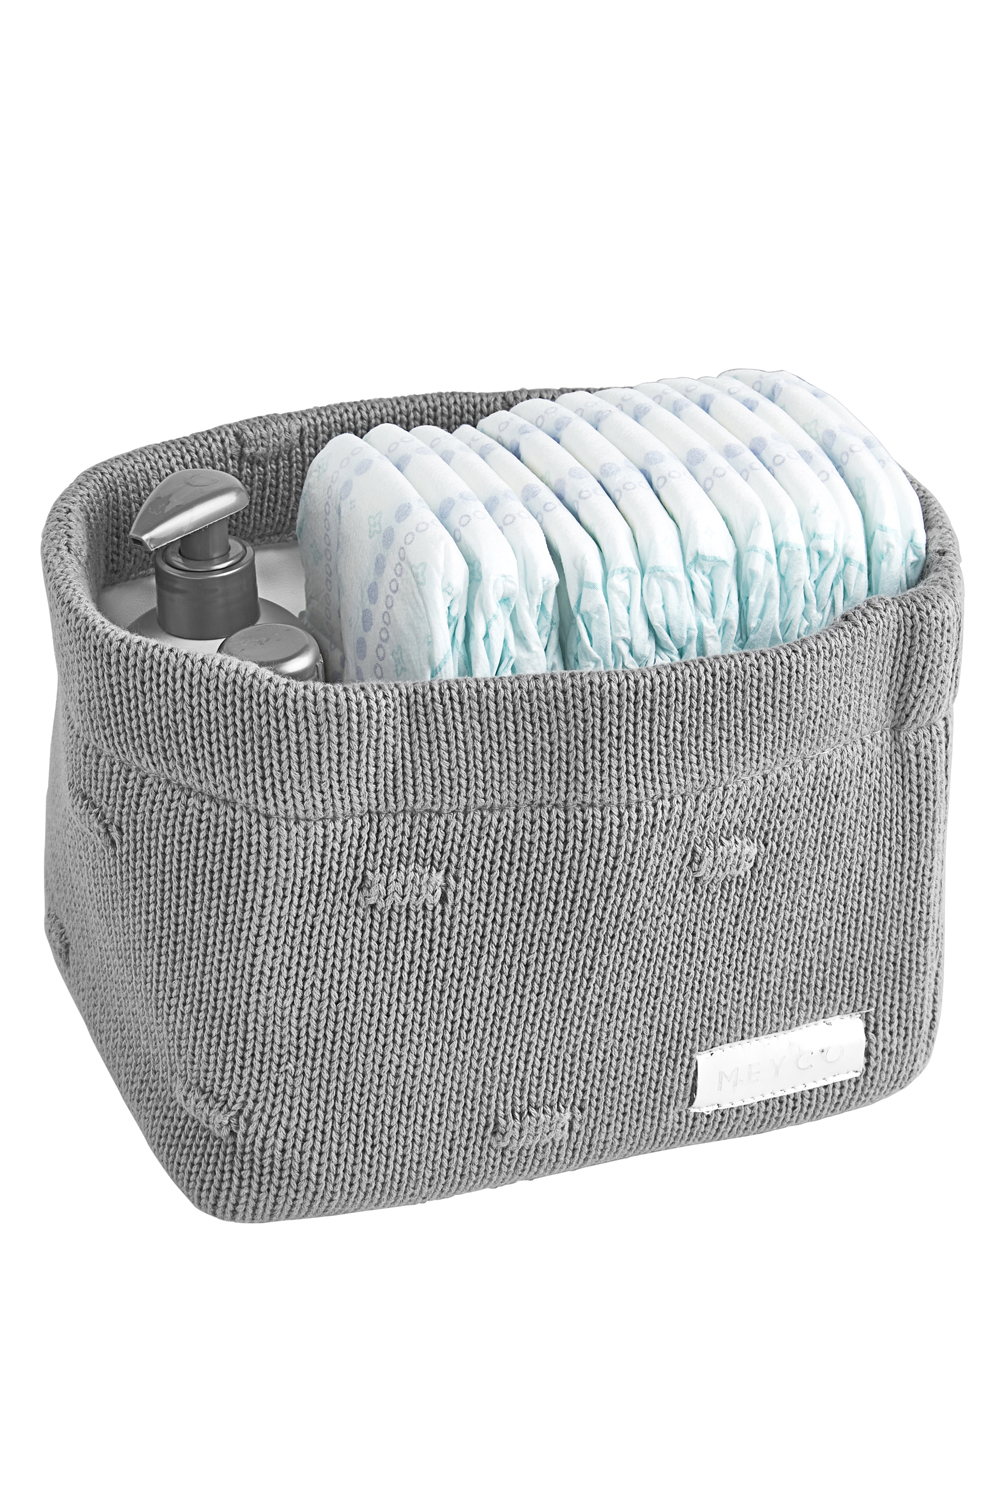 Nursery basket Knots - grey - Medium